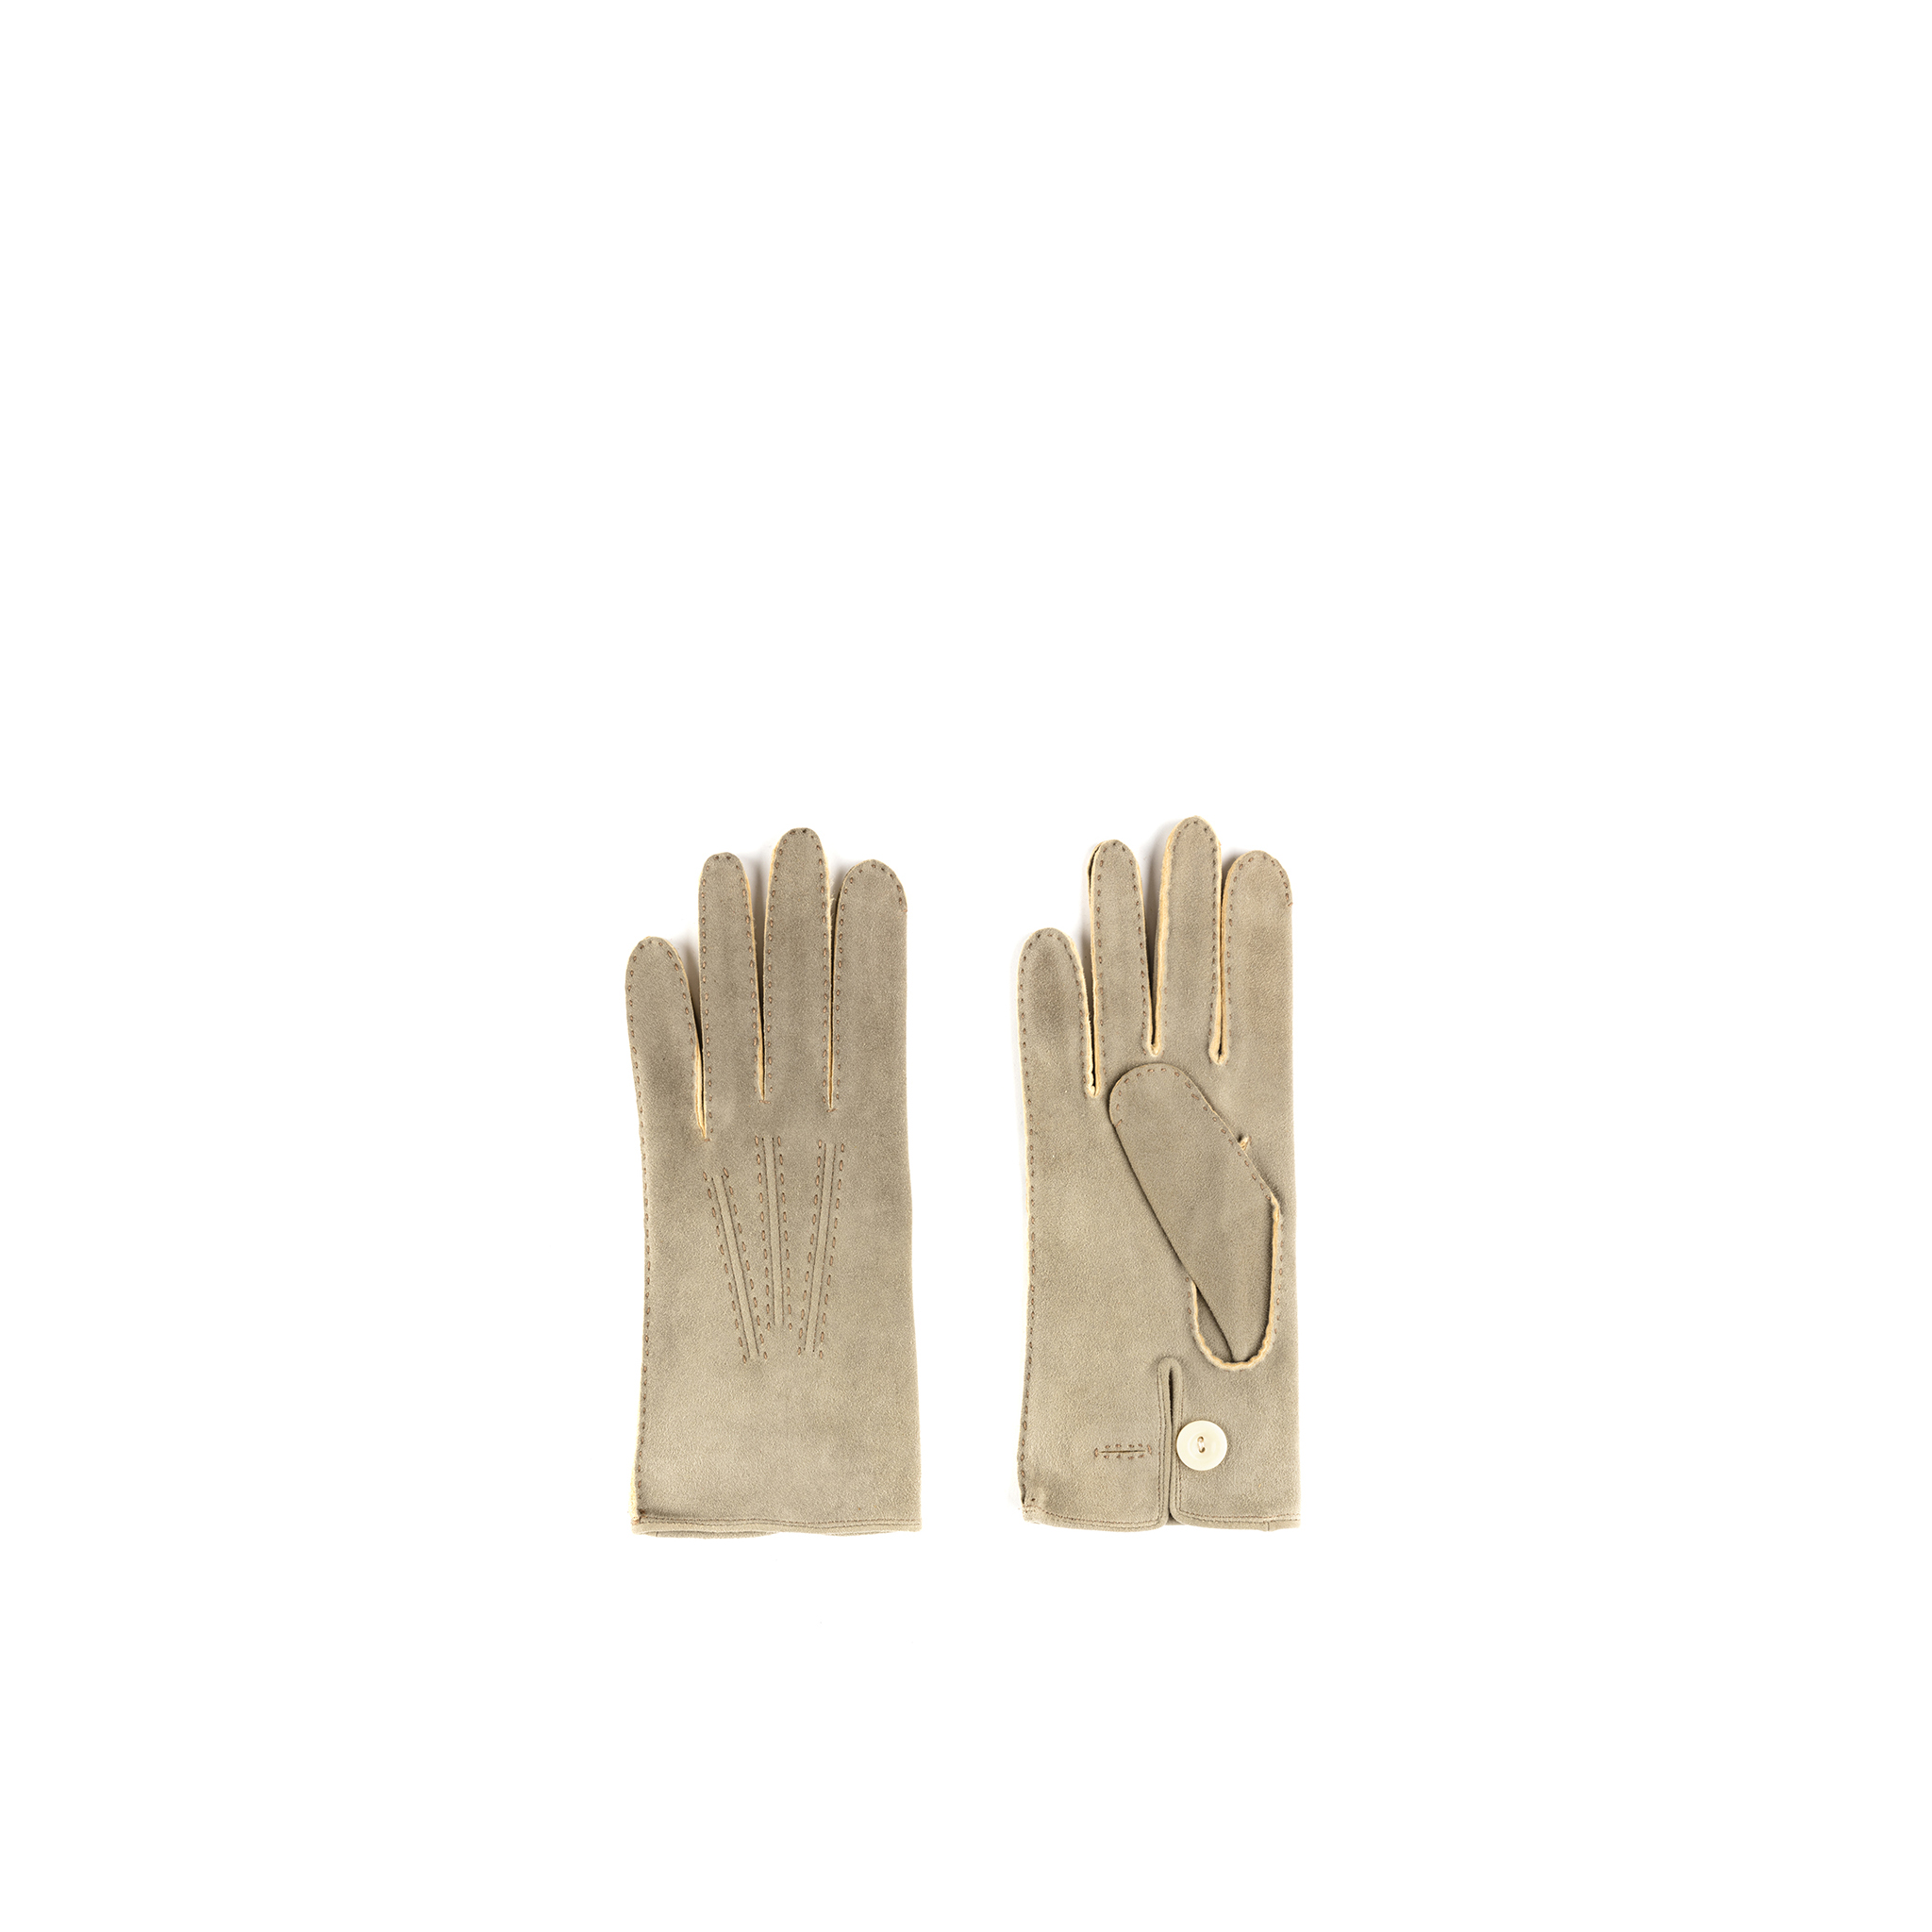 Rivoli Gloves - Suede kid leather - Grey color